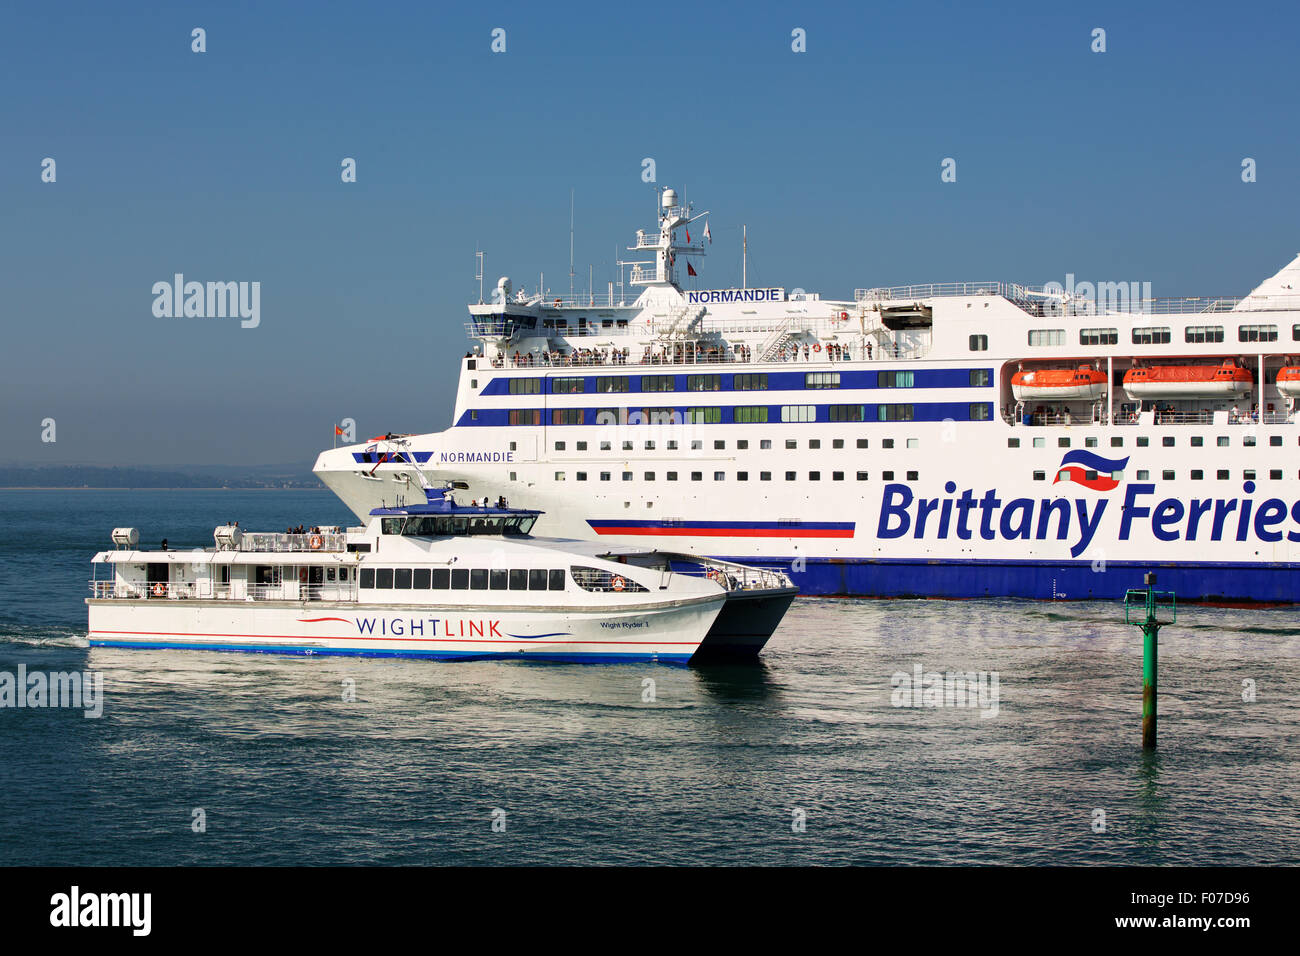 Catamaran car passenger ferry hi-res stock photography and images - Alamy